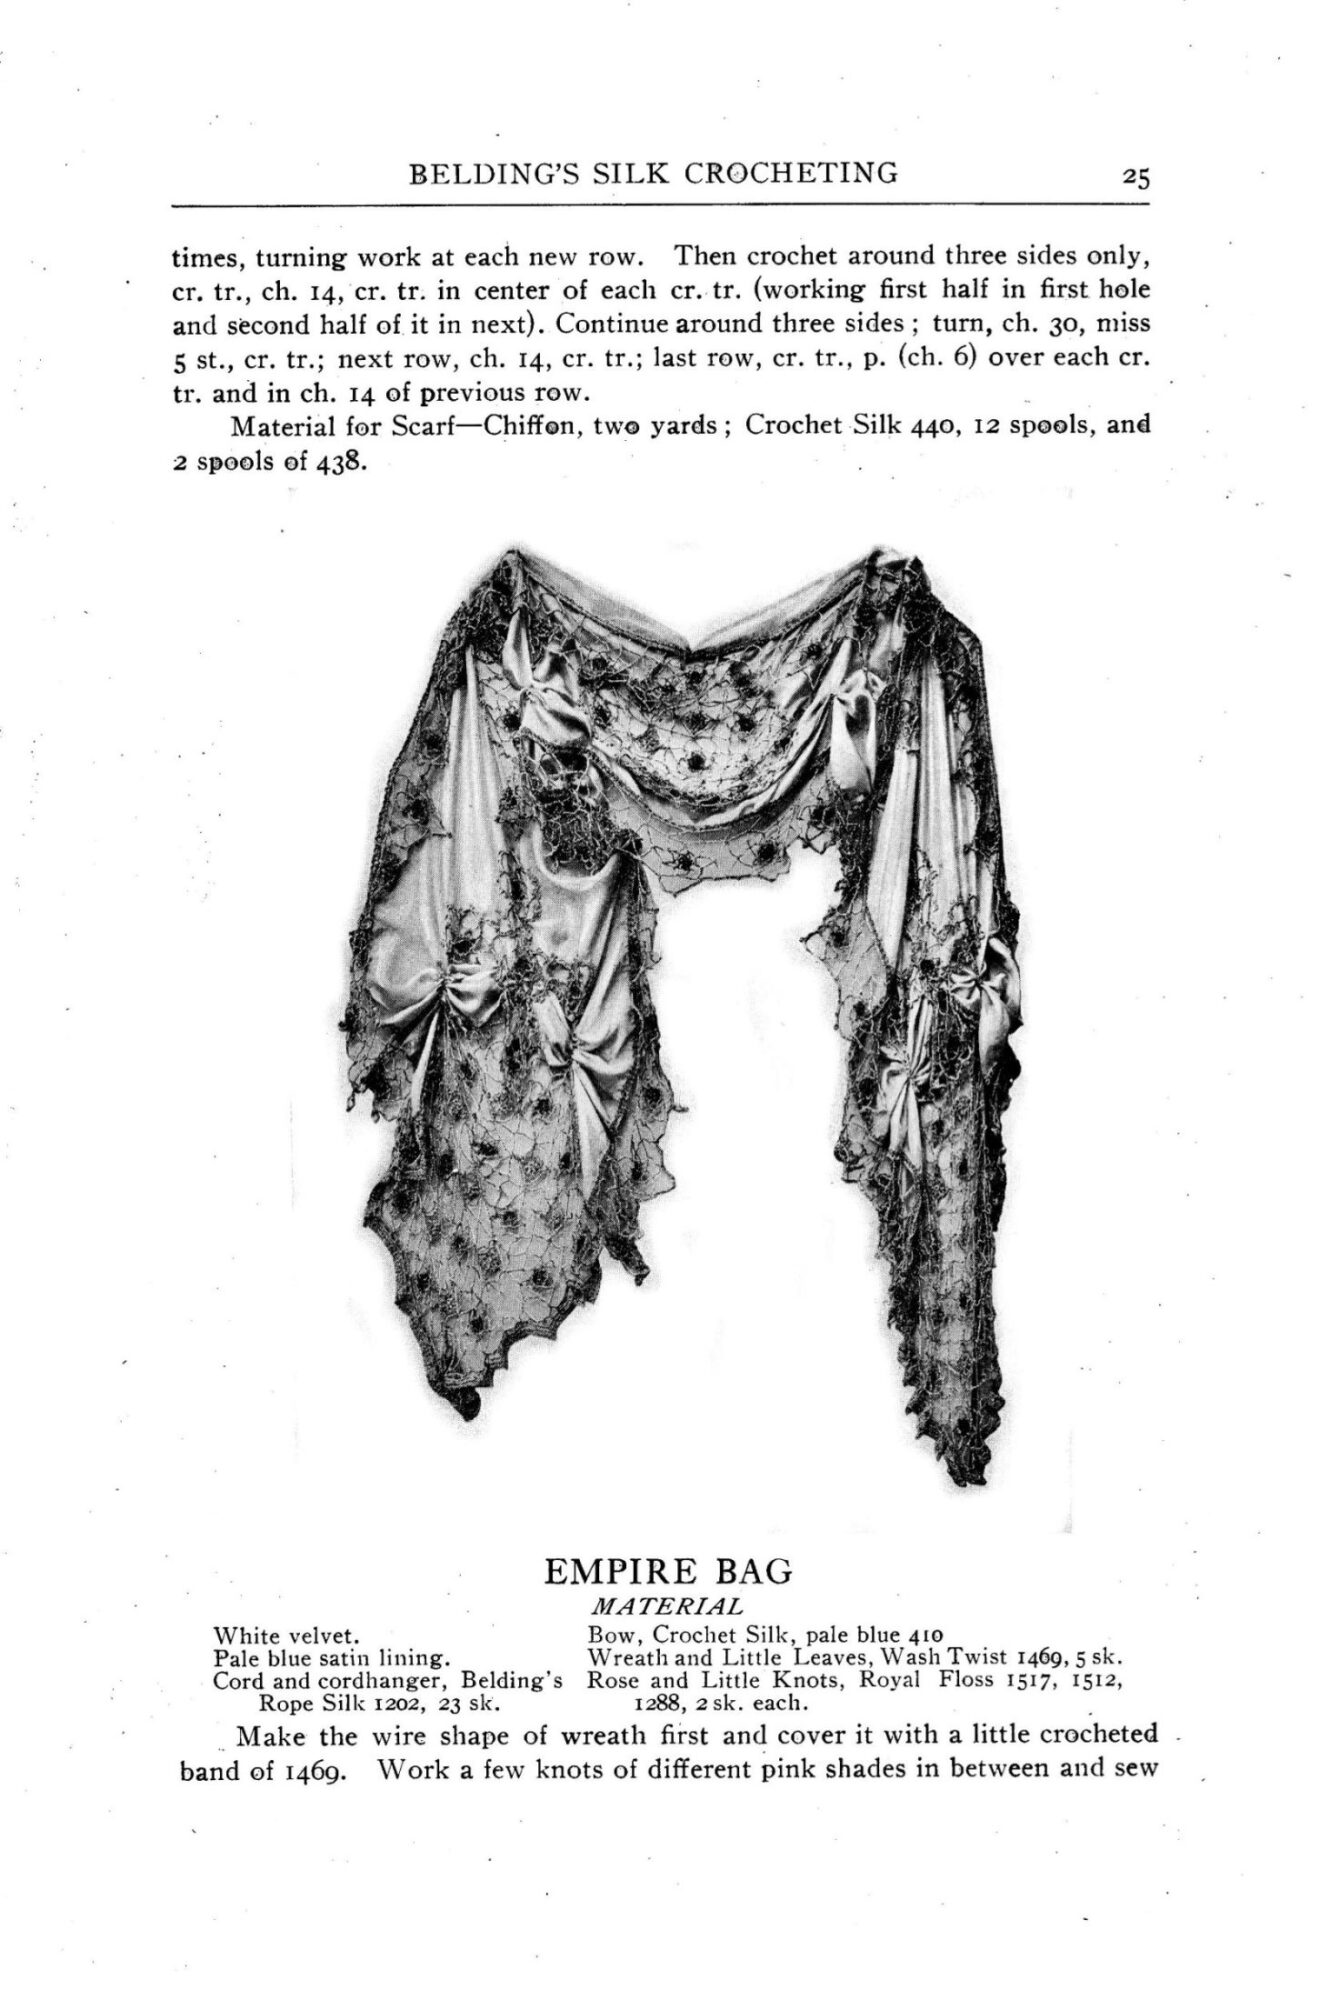 Empire Crochet Bag